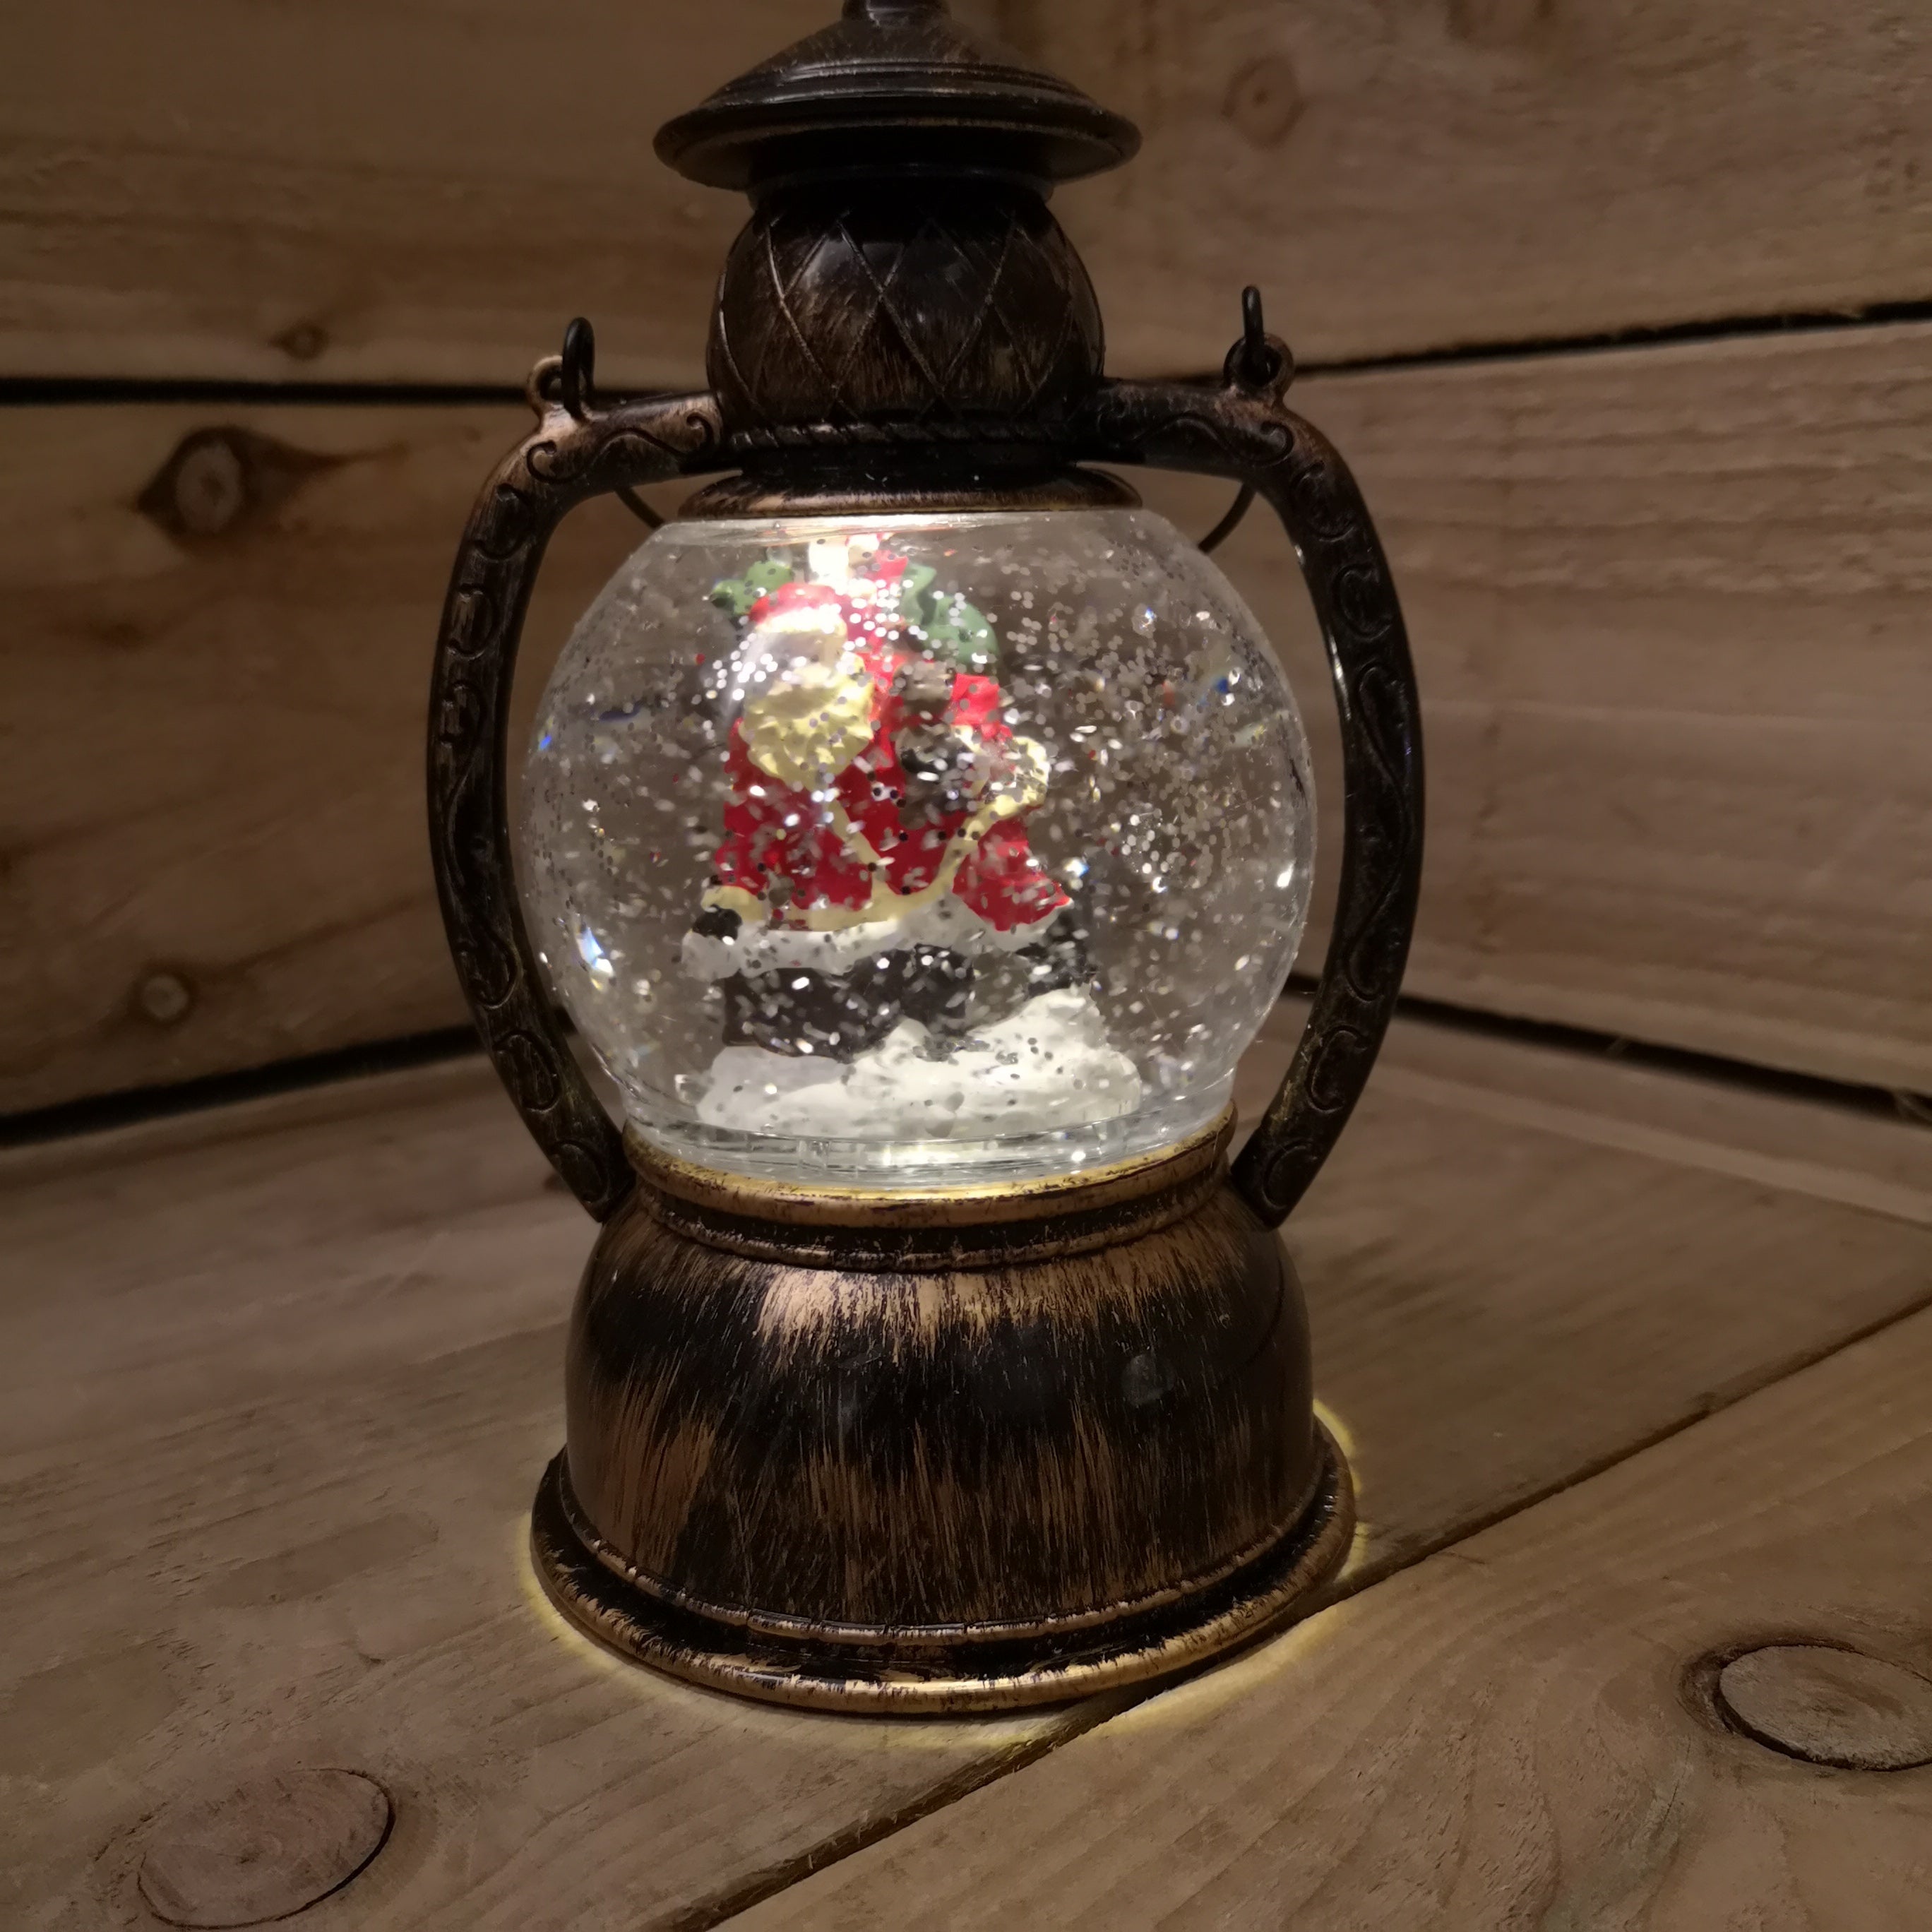 20cm Premier Christmas Water Spinner Antique Effect Hurricane Lantern with Santa Scene Battery Operated